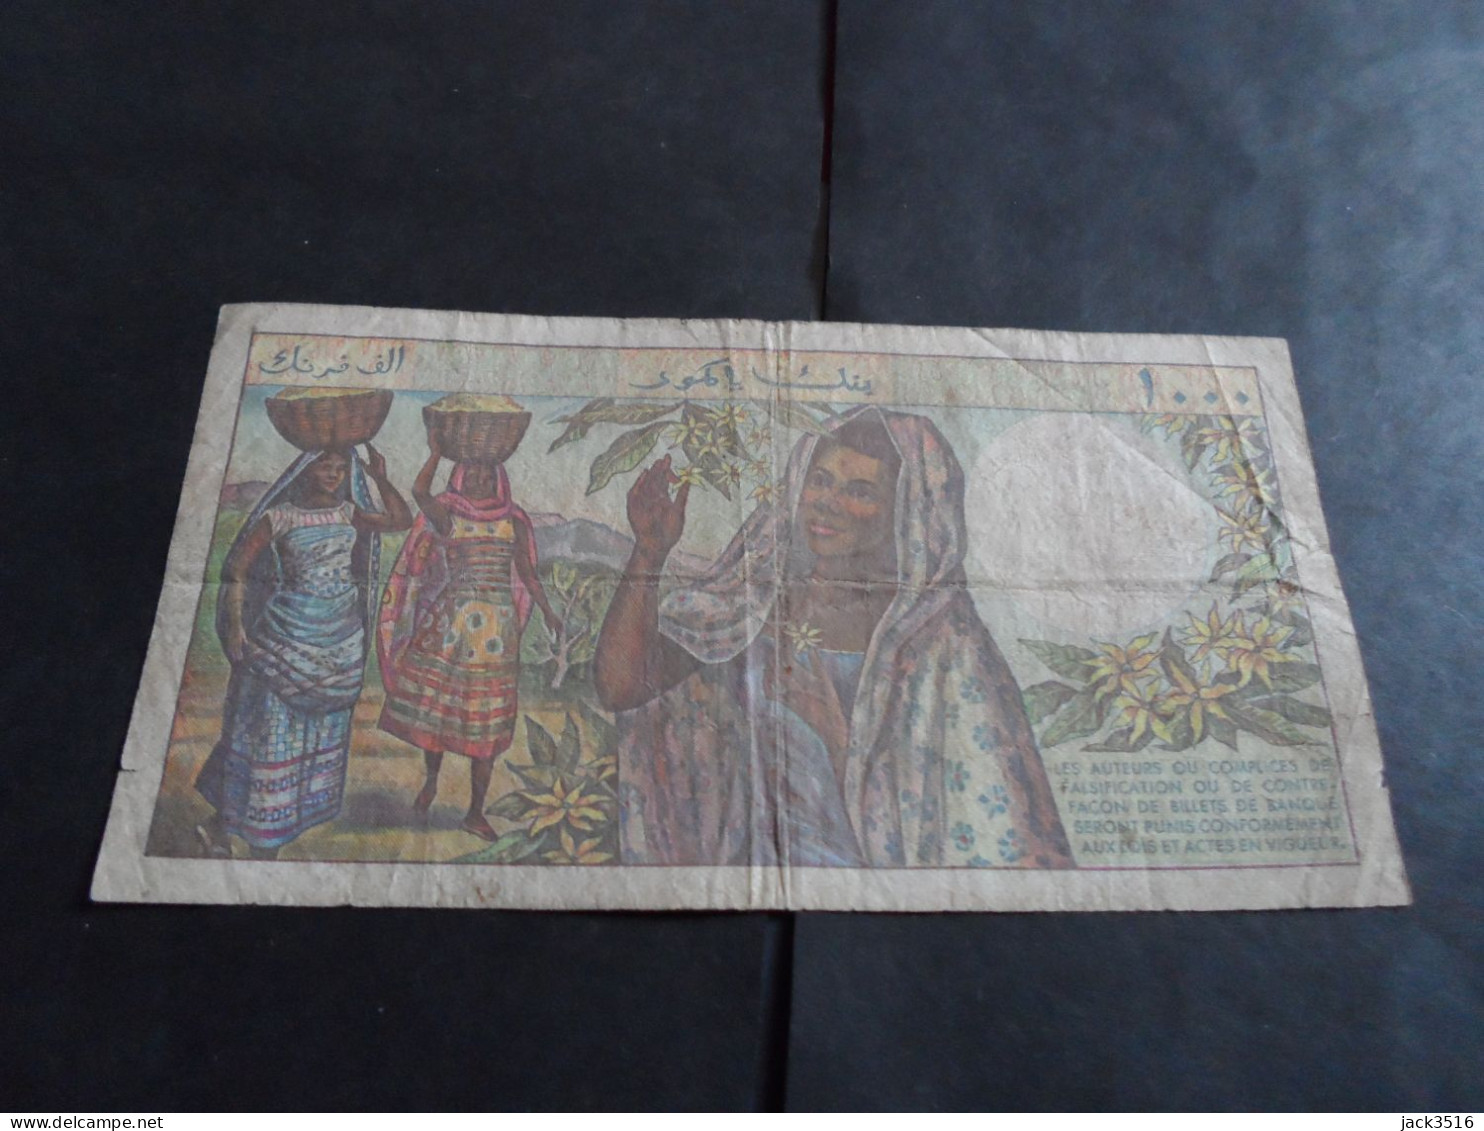 Comores: Billet 1000 Francs 1976 - Comores